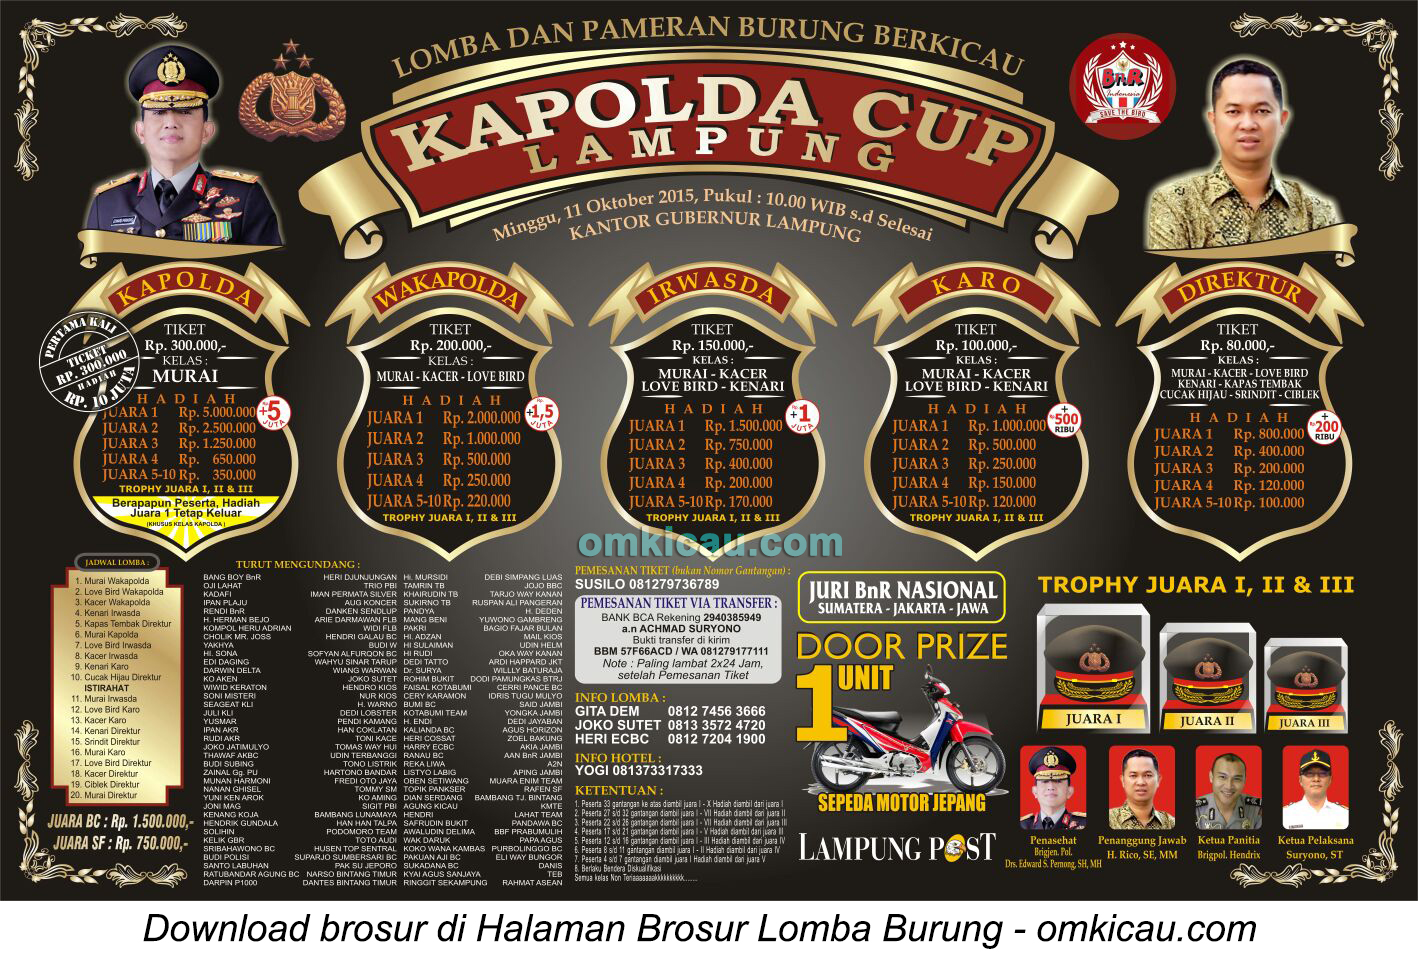 Brosur Lomba Burung Berkicau Kapolda Cup Lampung, Minggu 11 Oktober 2015